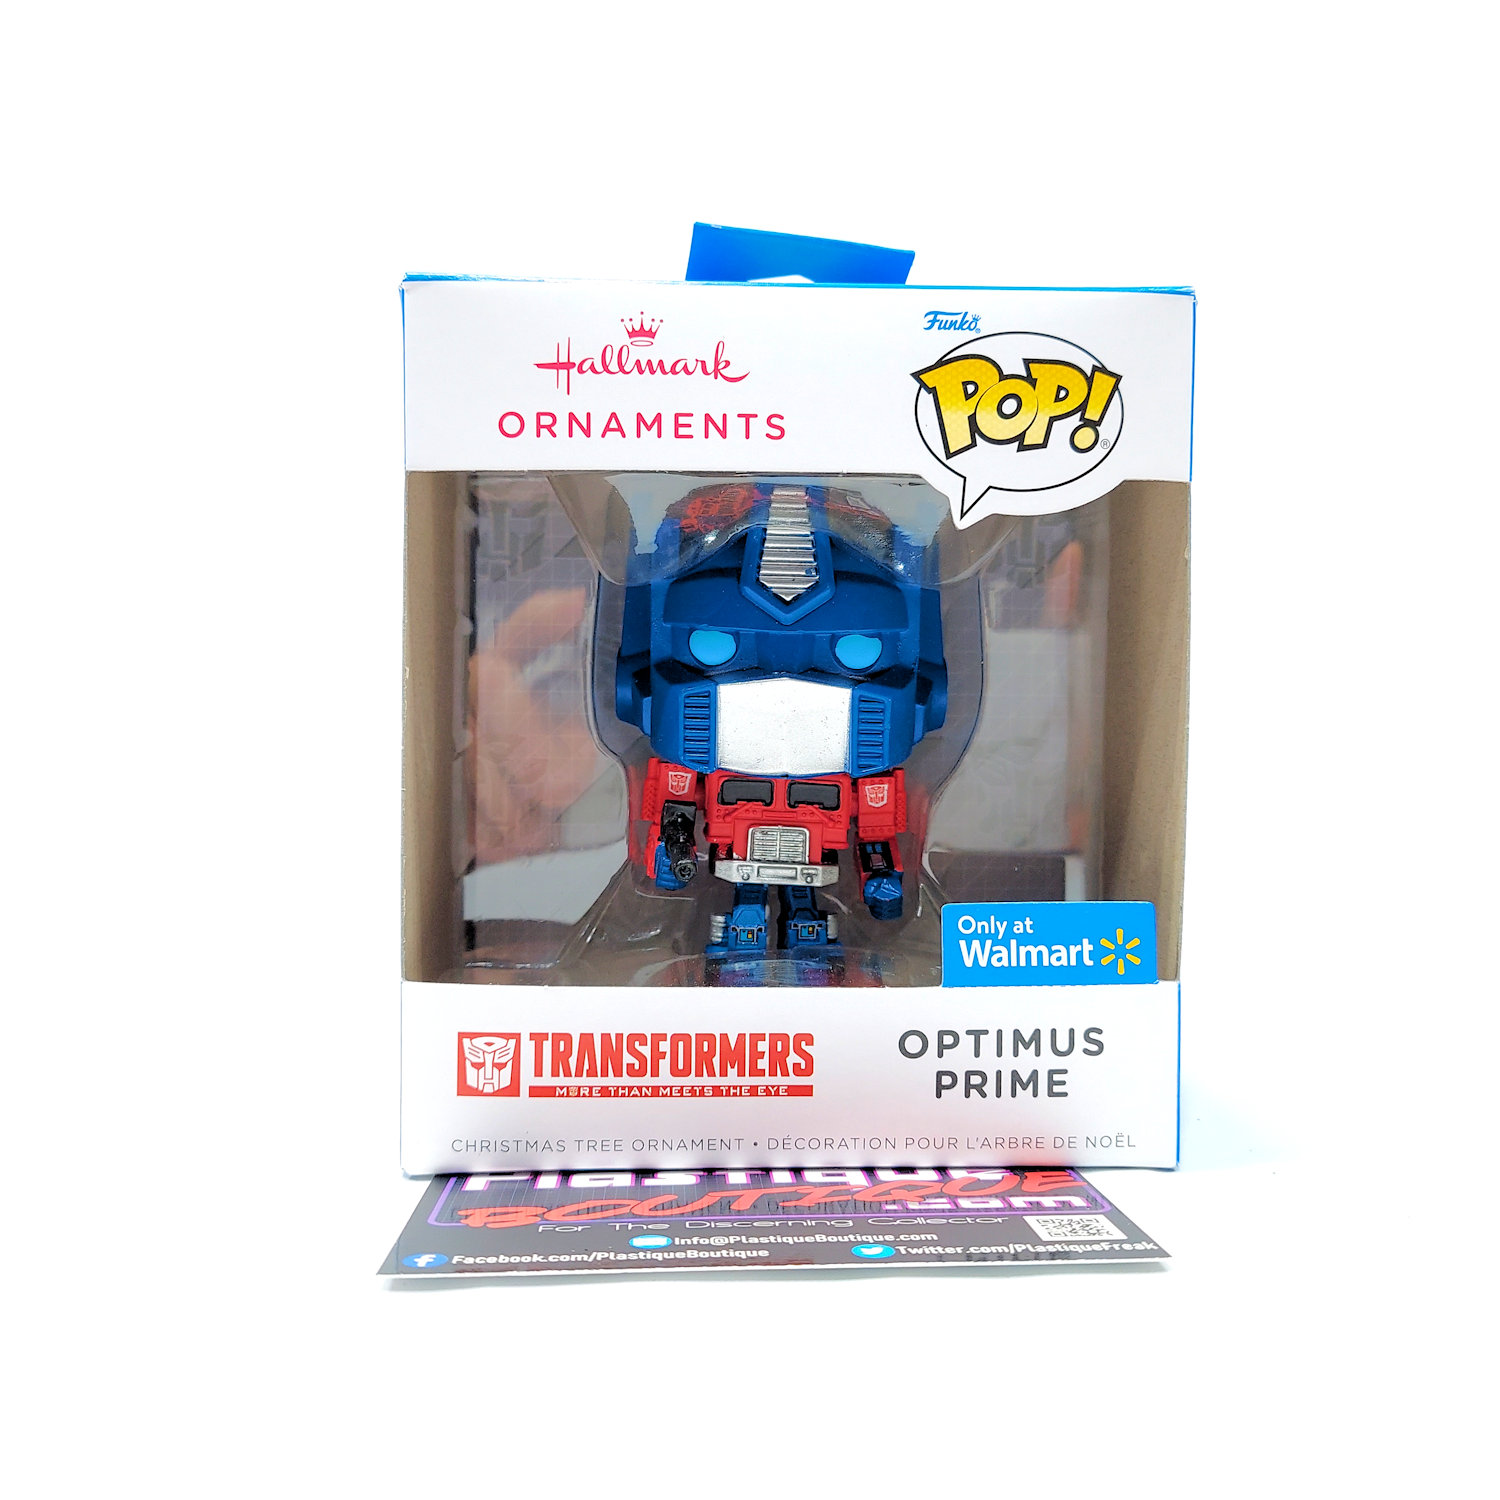 Hallmark/Funko Pop Ornament Transformers Optimus Prime (Walmart